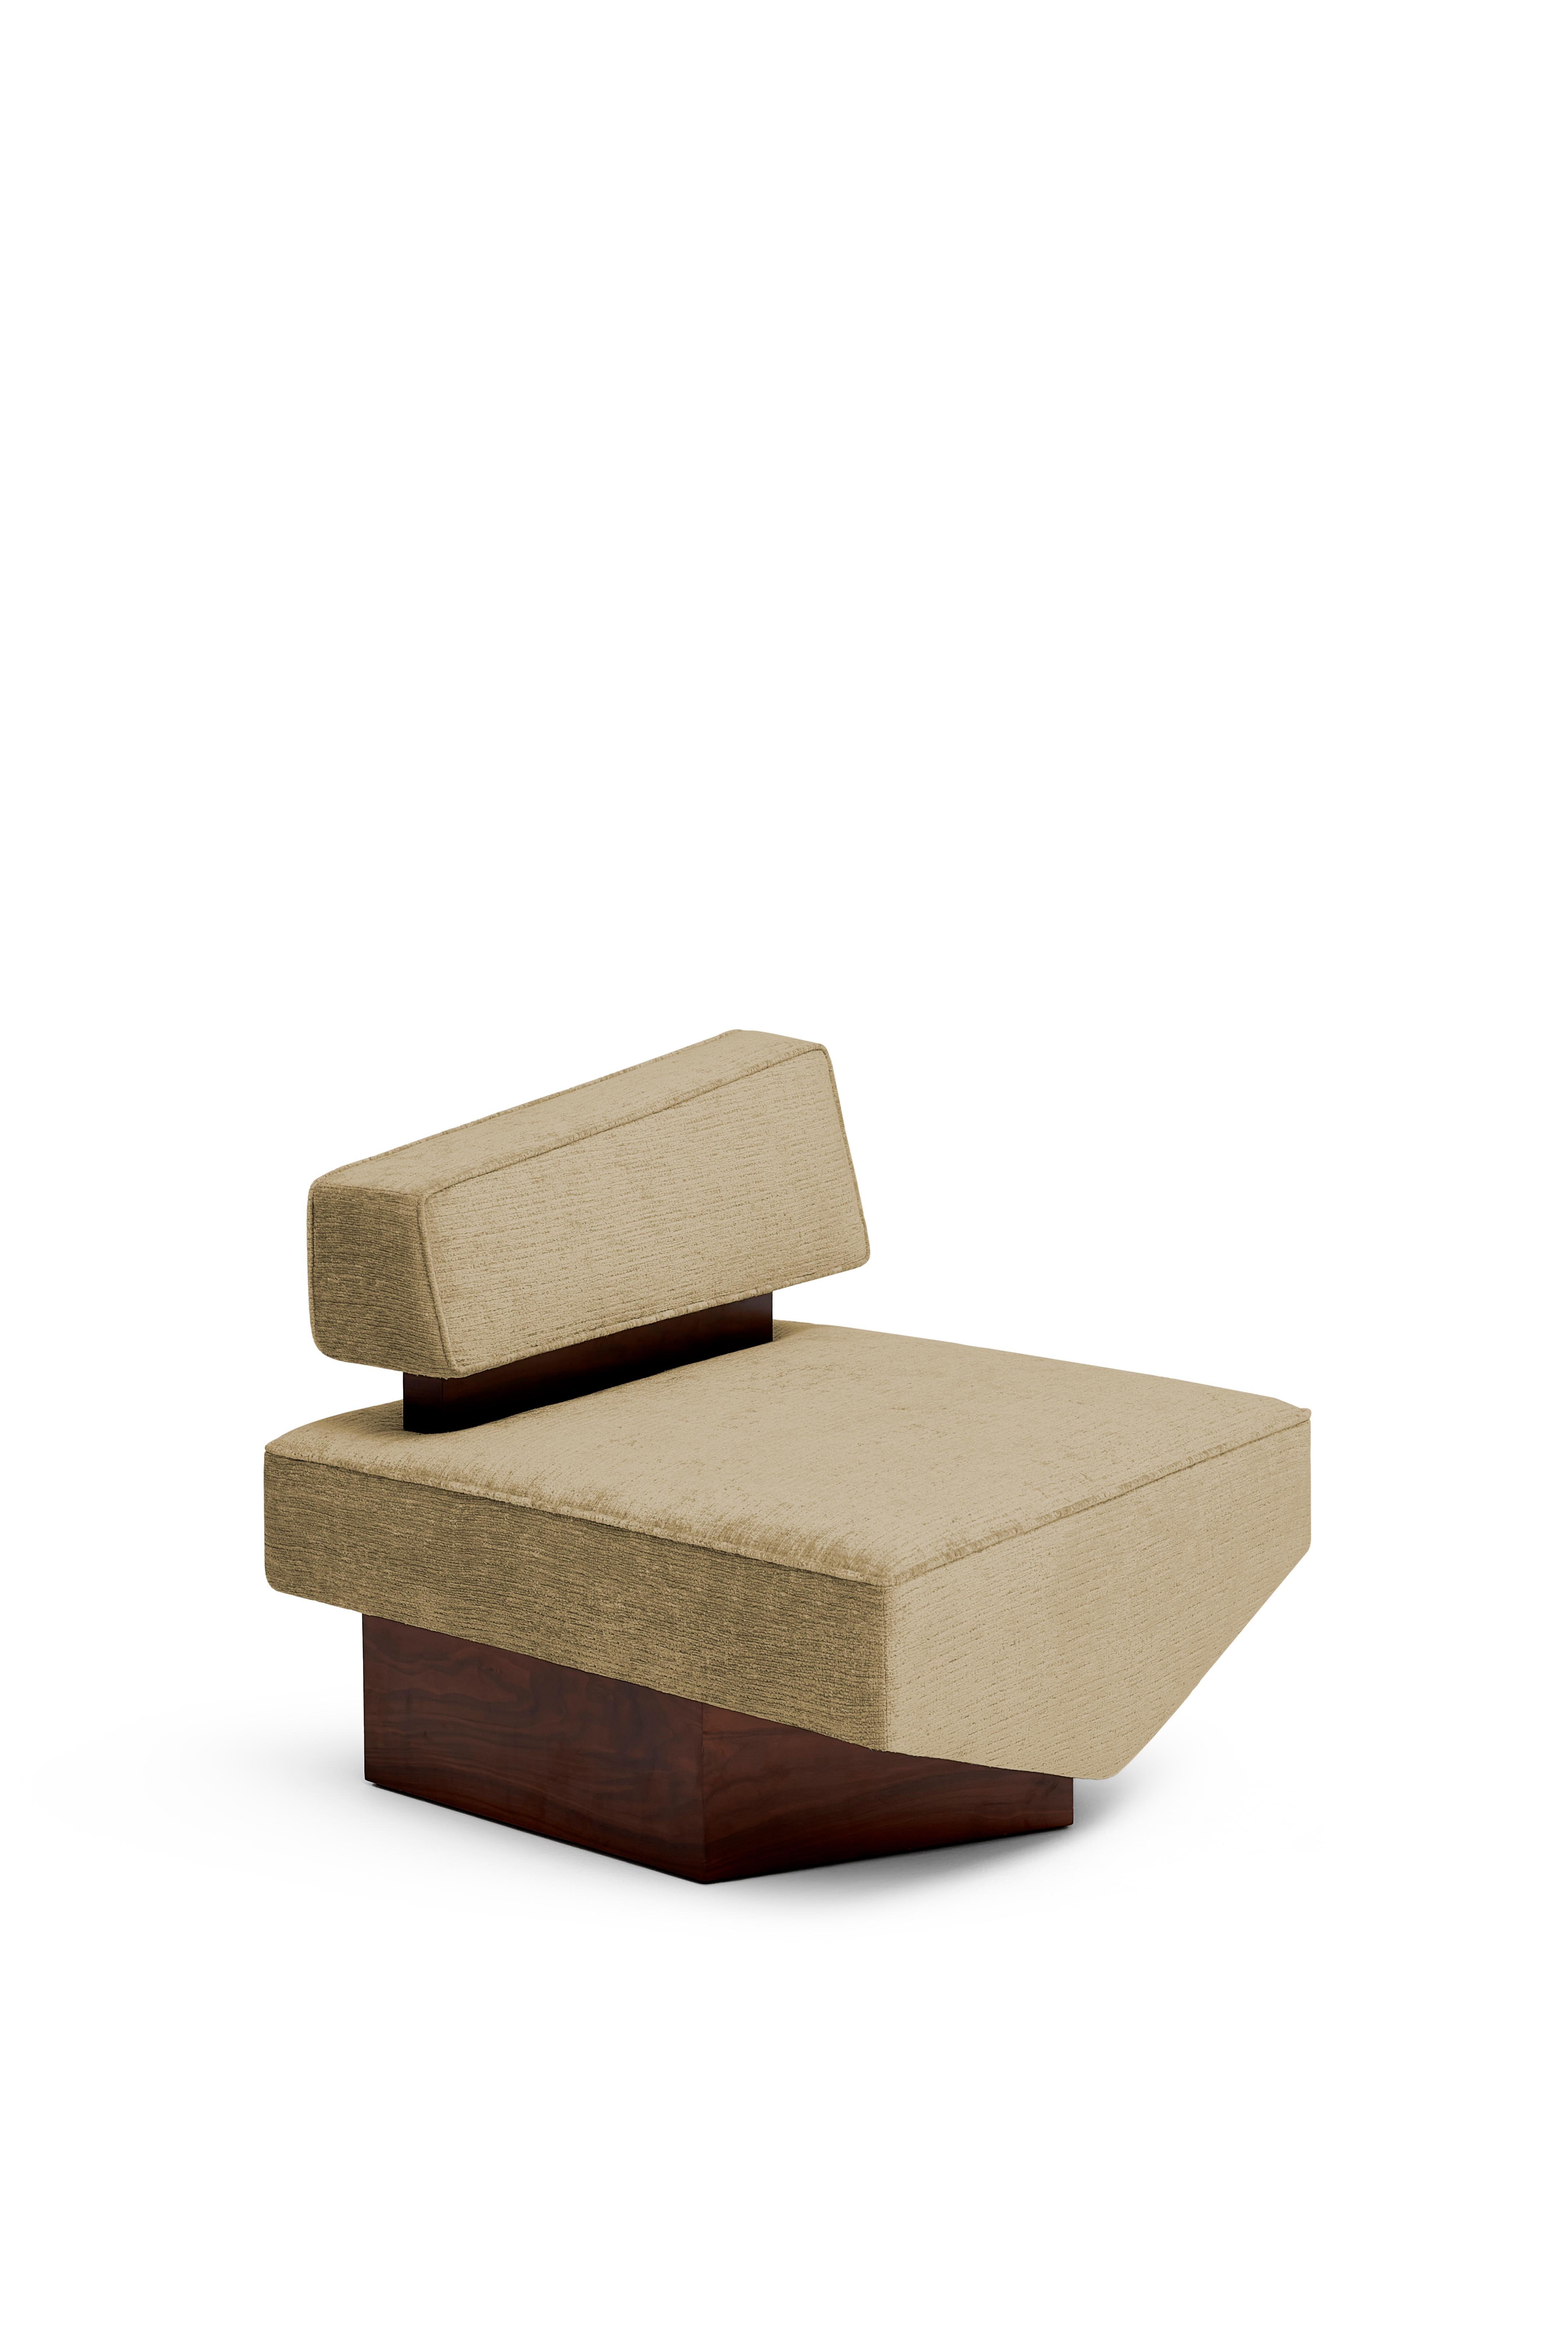 Organic Modern Contemporary Armchair 'Divergent' by Marta Delgado, Walnut, Sand For Sale